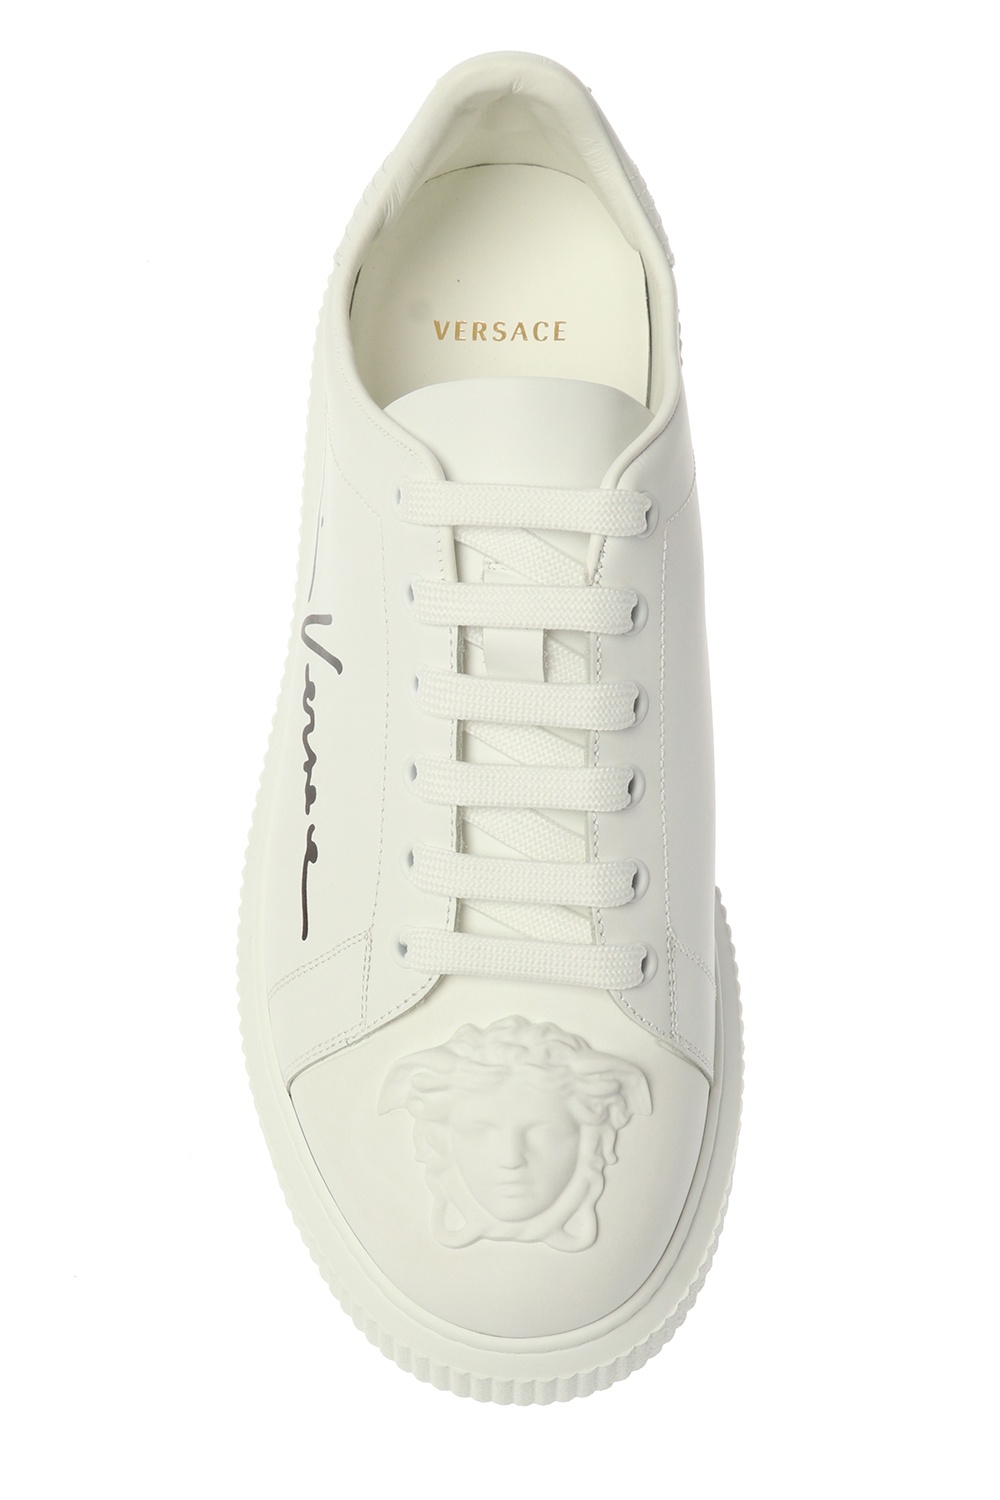 versace shoes size 13